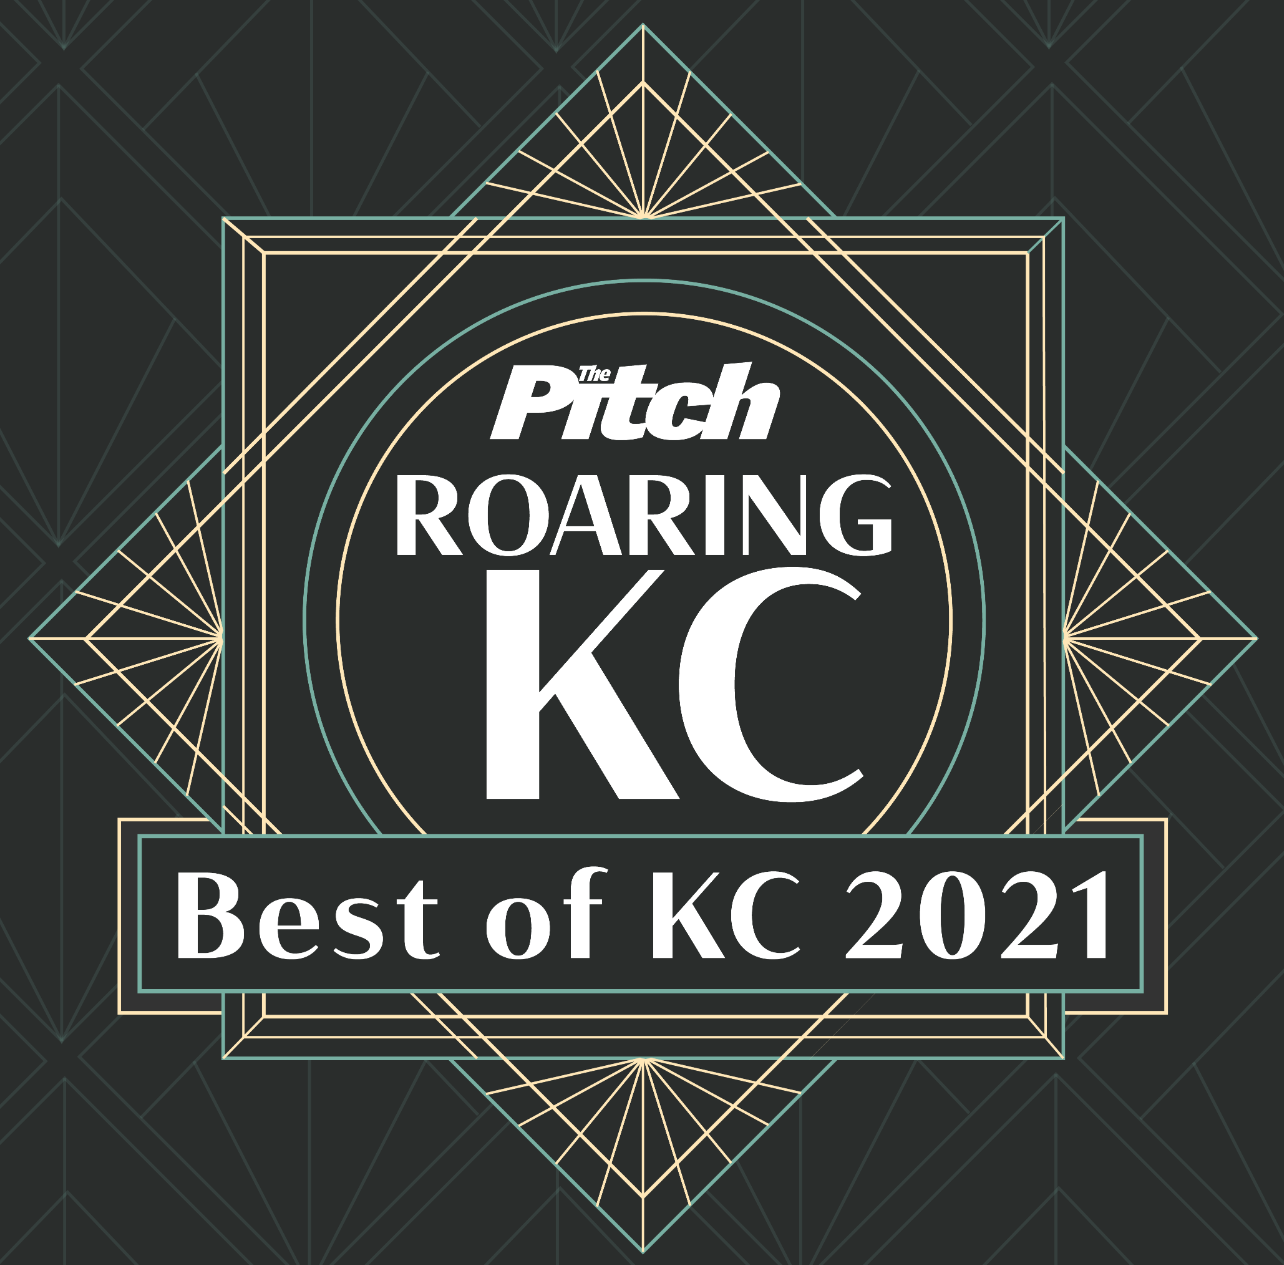 The Best of KC 2021 Winner